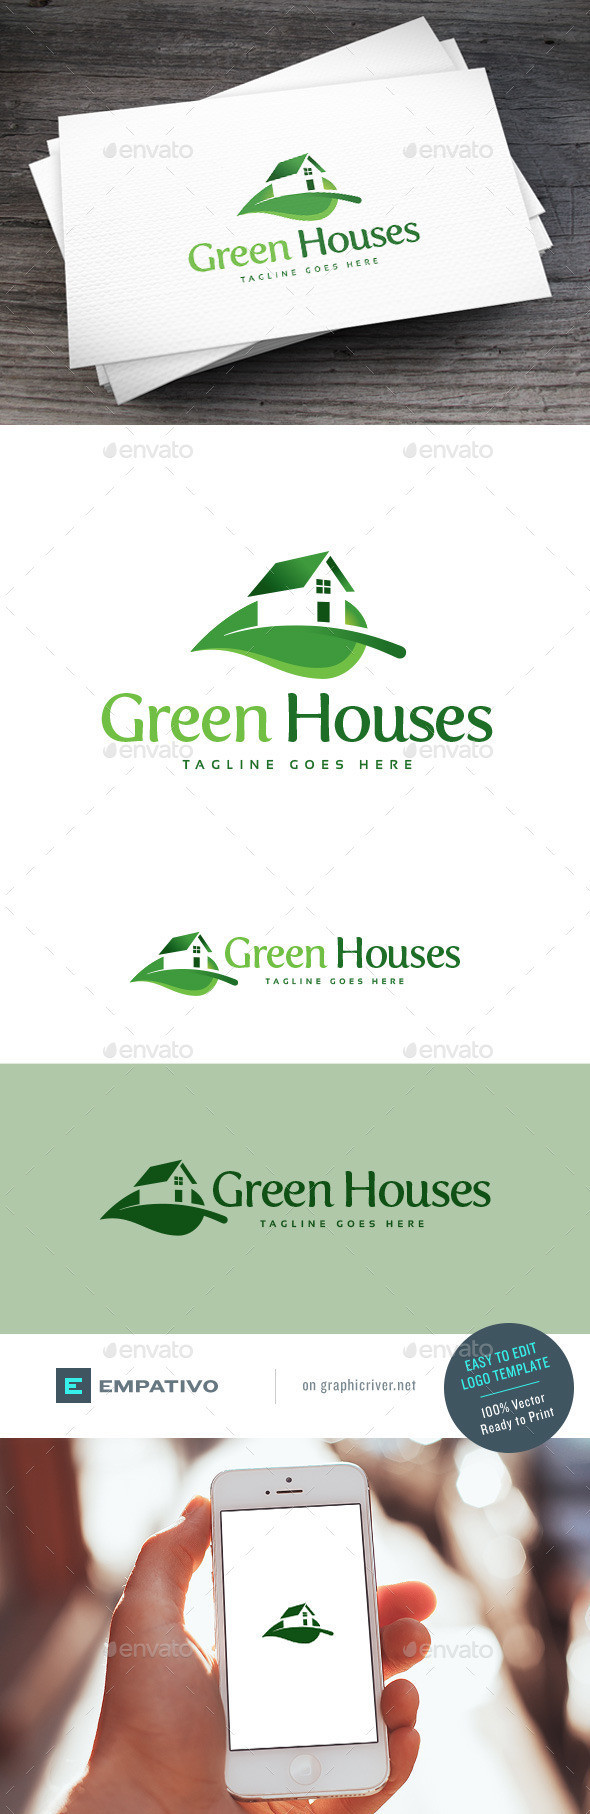 Green houses logo template